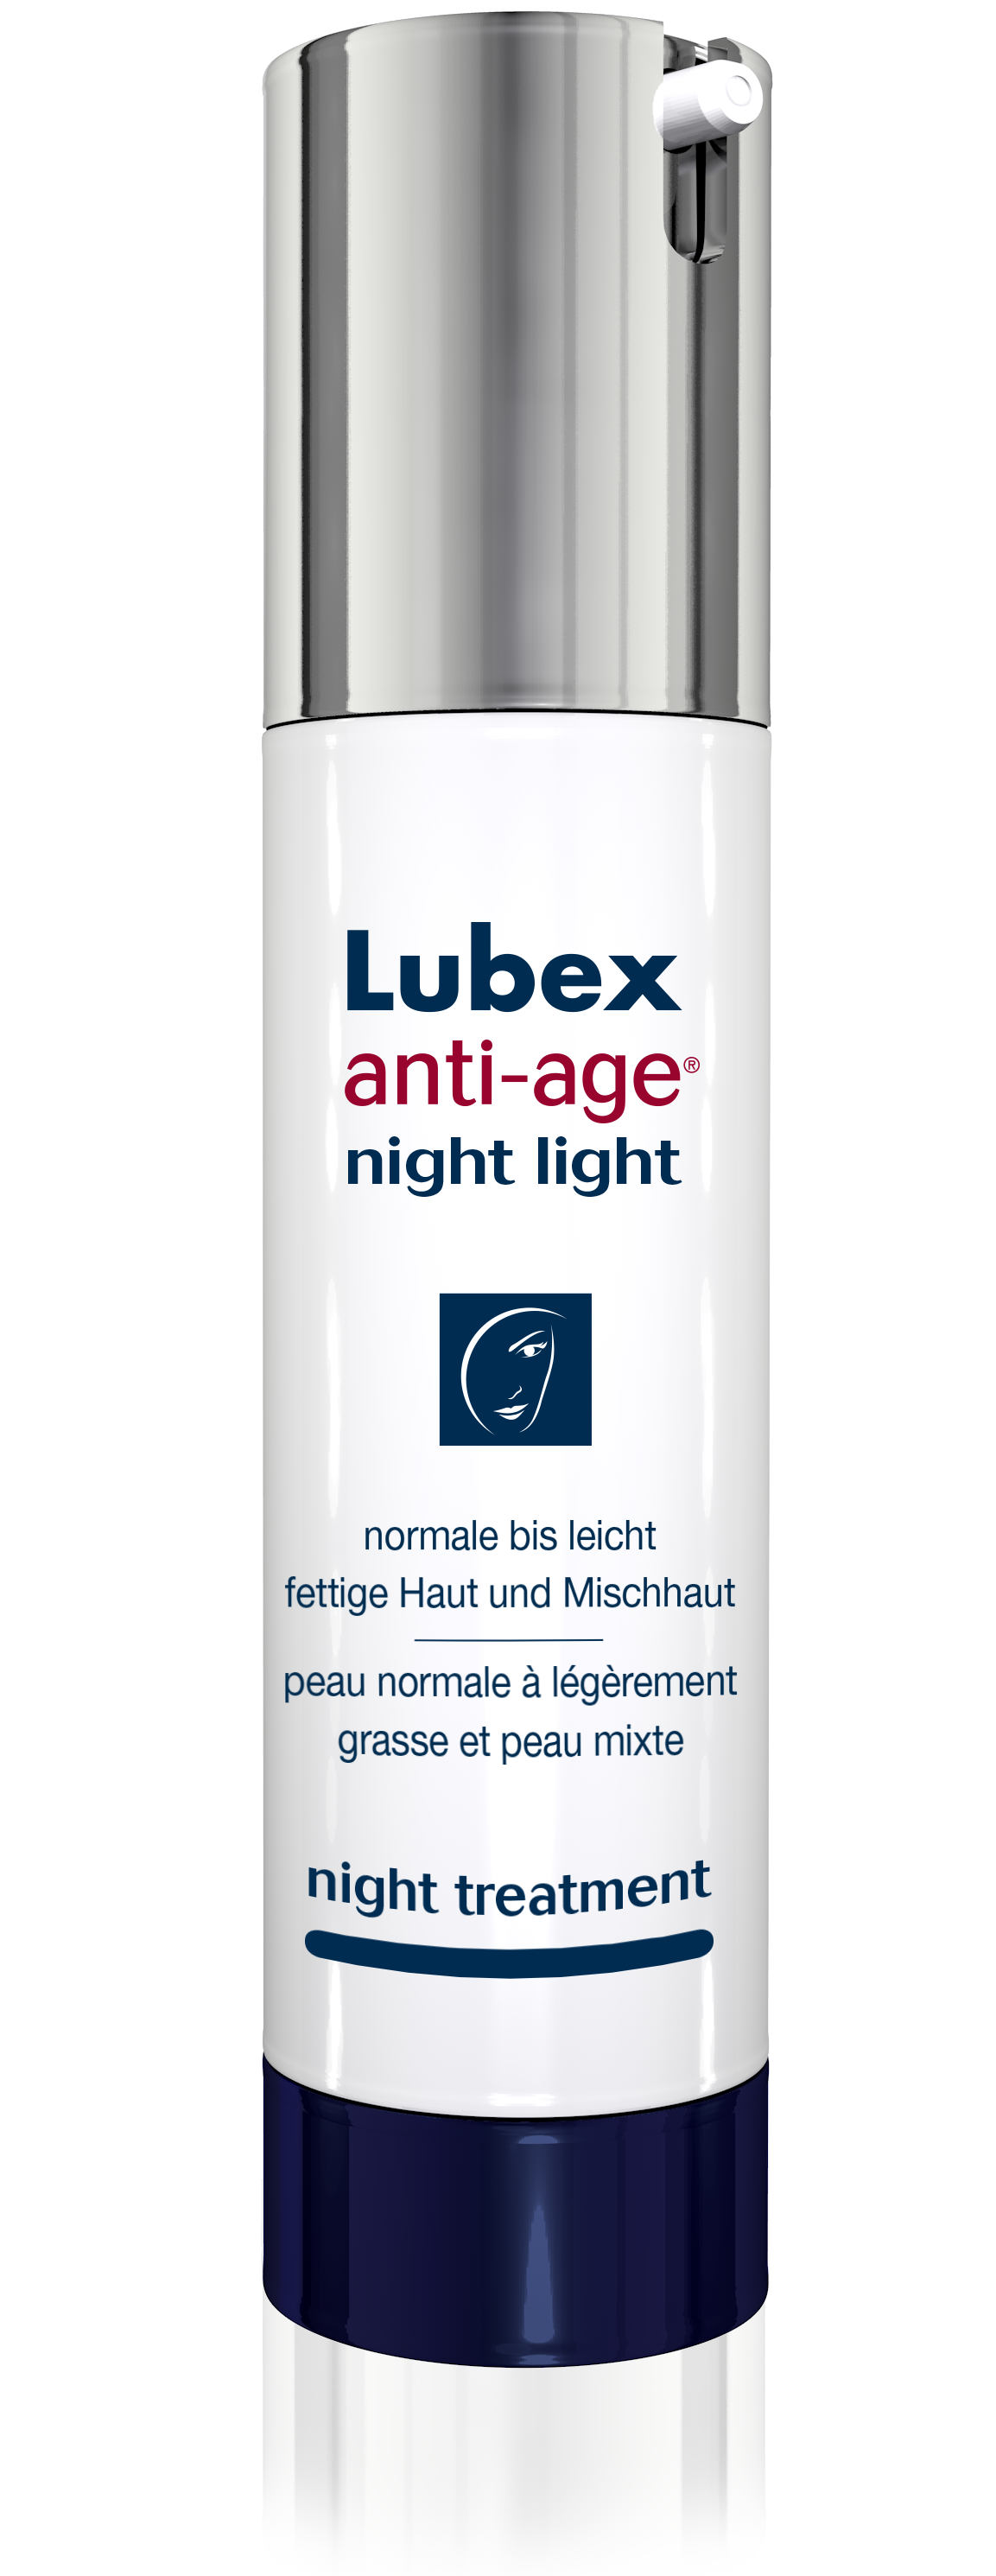  anti-age night light – lubex anti-age excellence